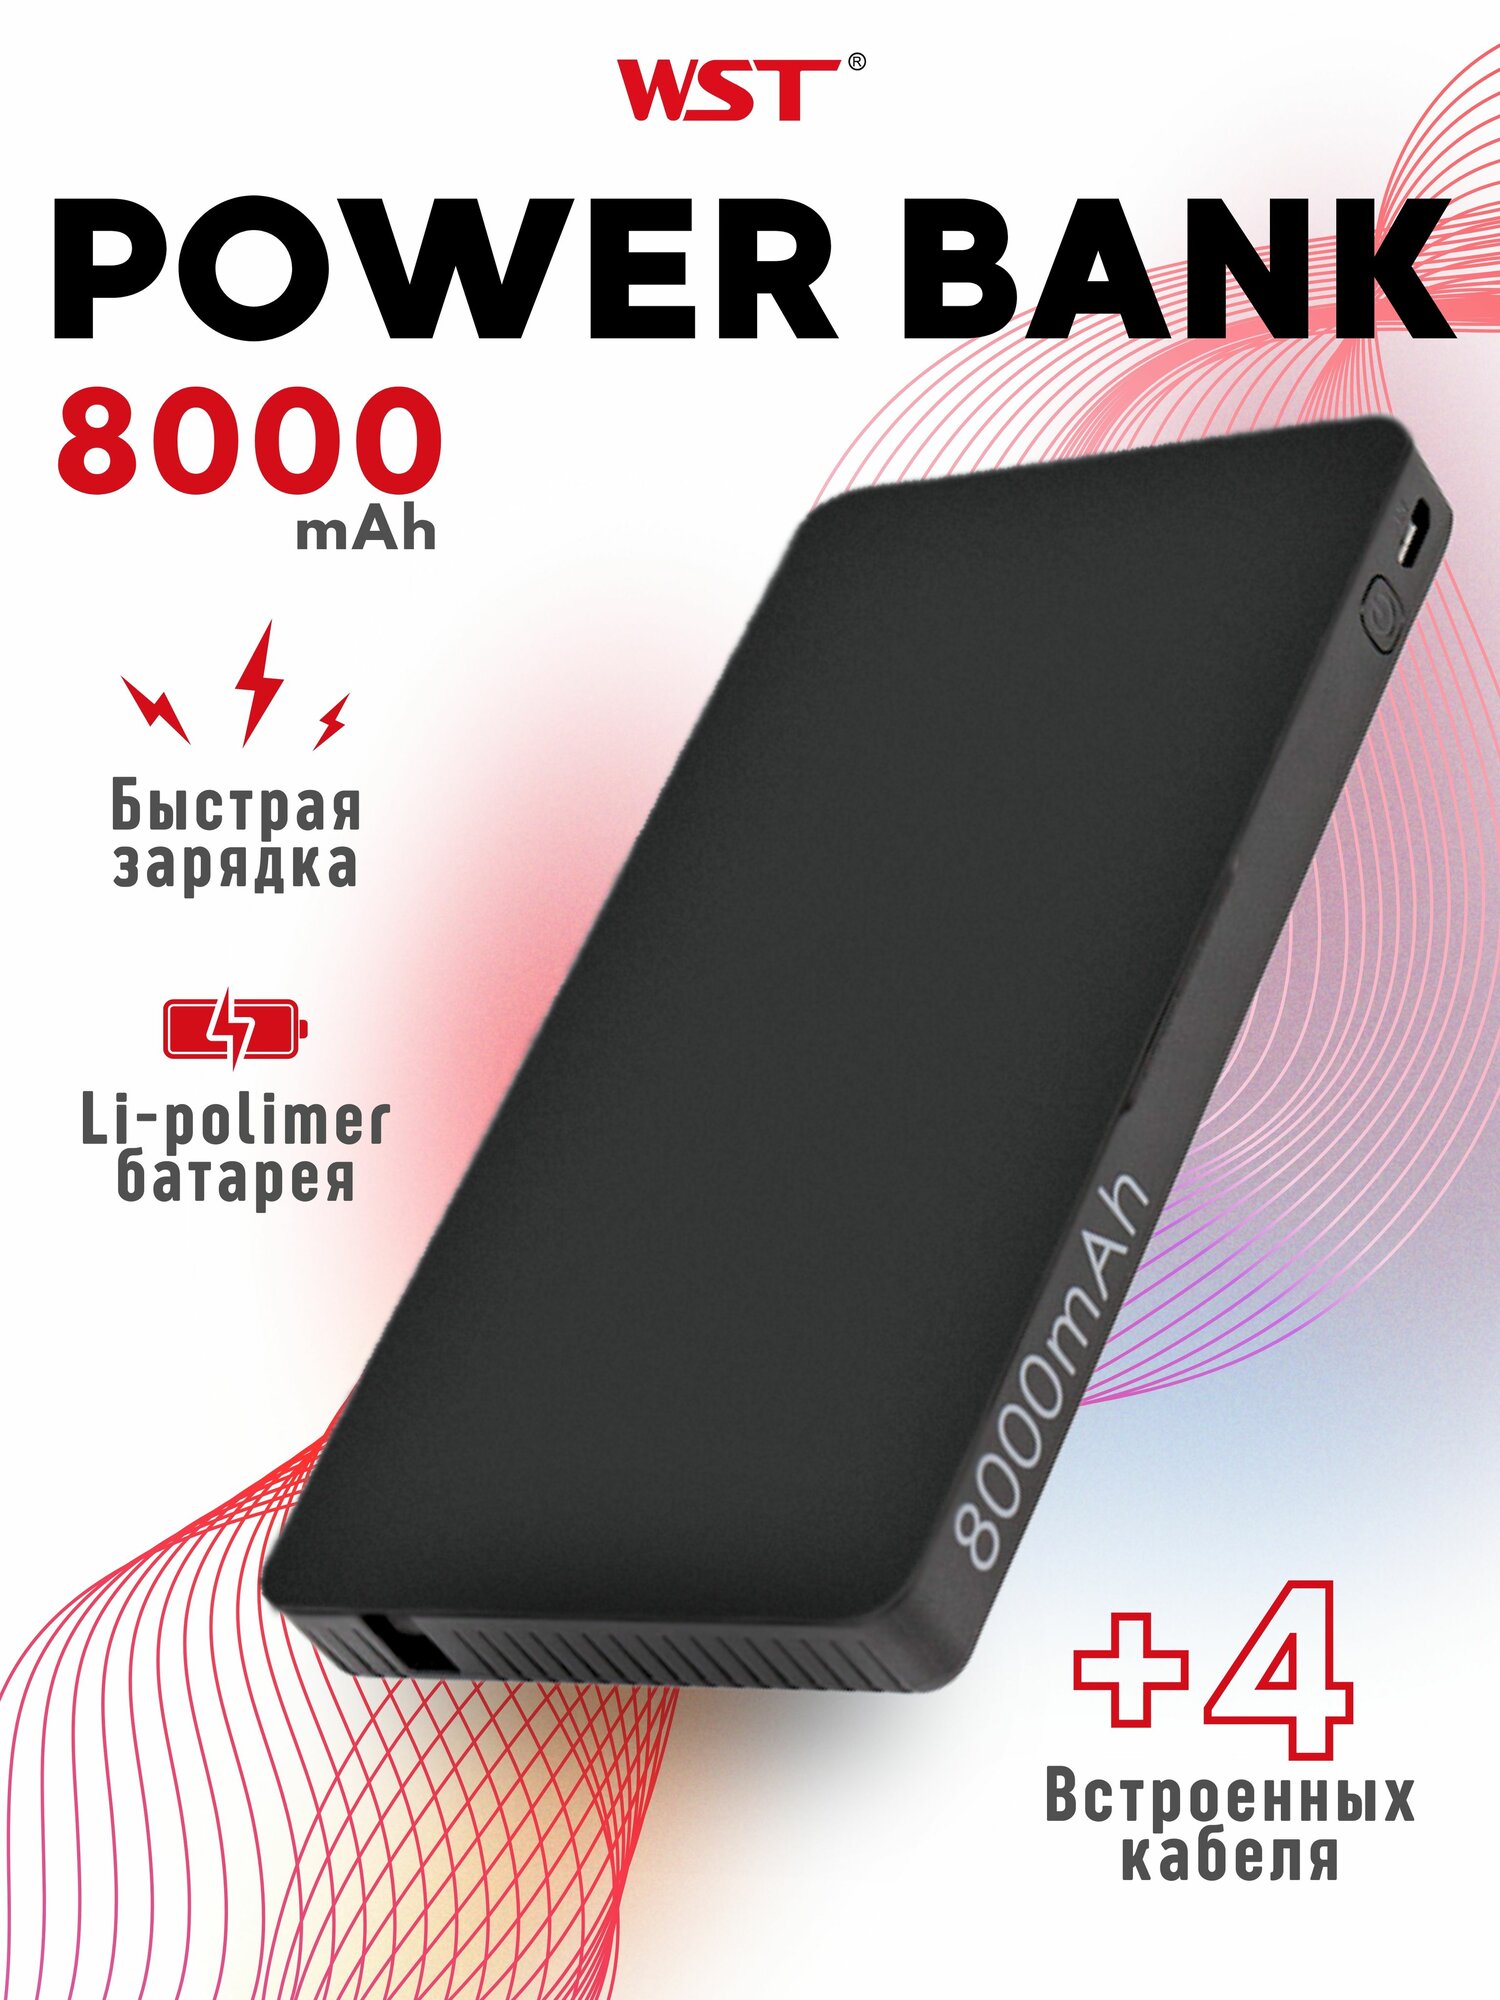 Power Bank Внешний аккумулятор WST WP932 8000 mAh (Встроенные провода type-c micro usb lighting)